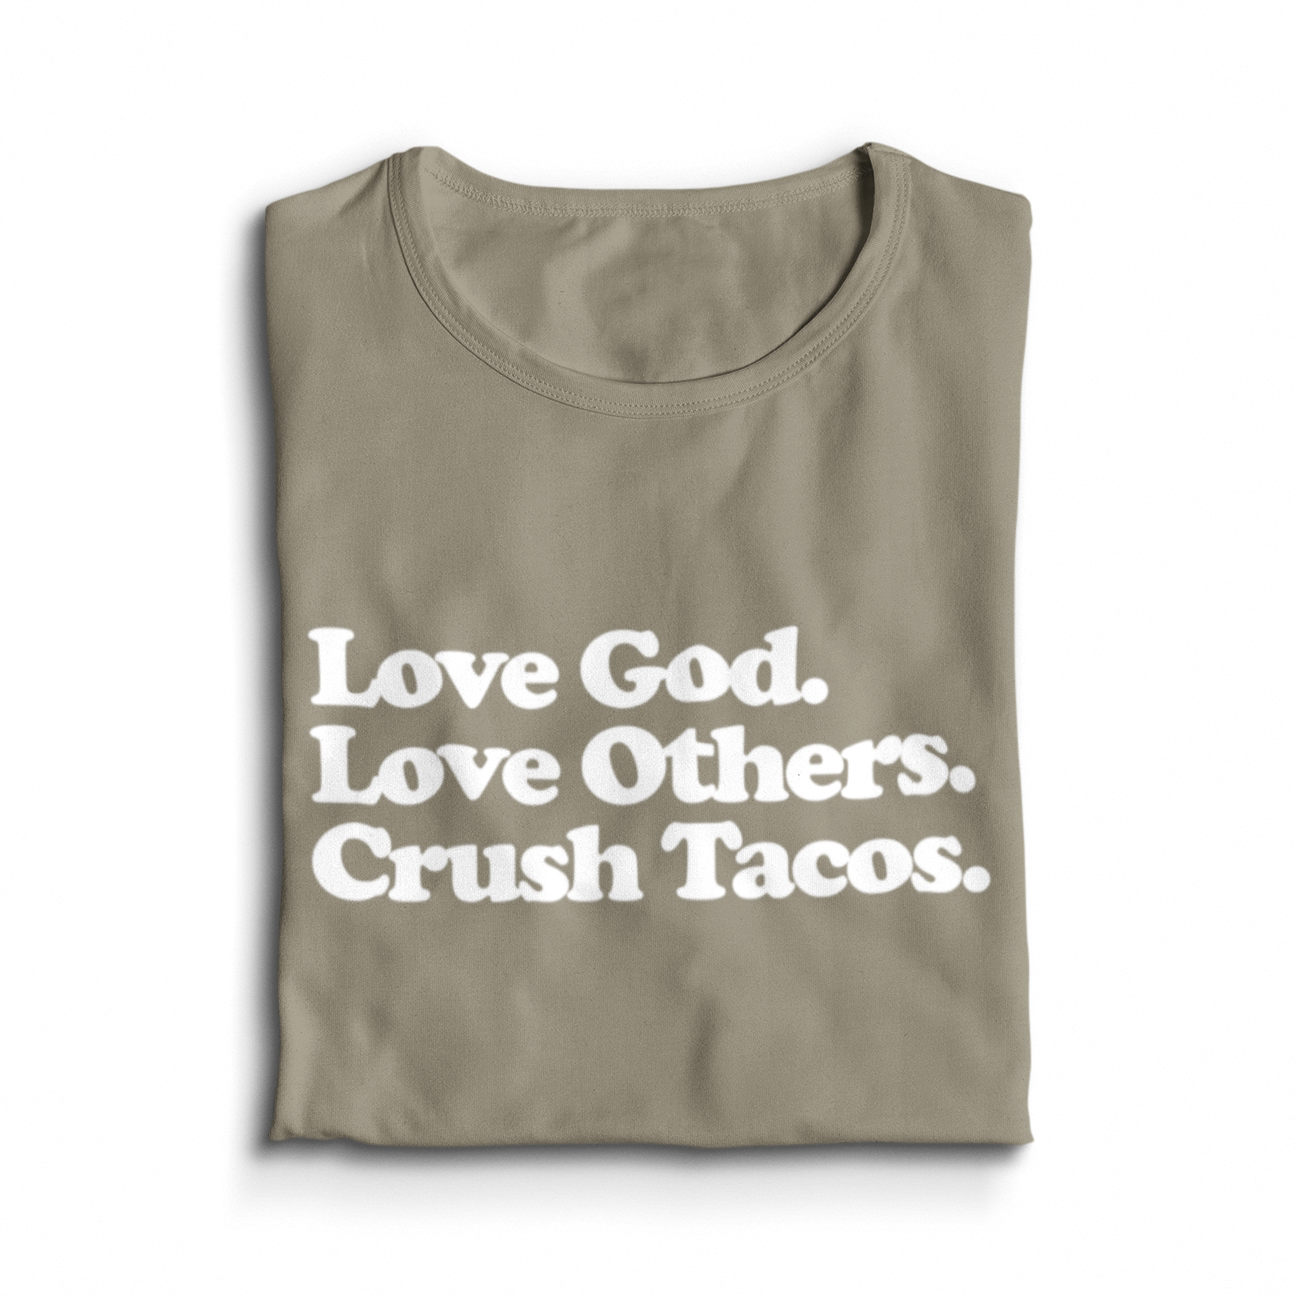 Crush Tacos T-shirt